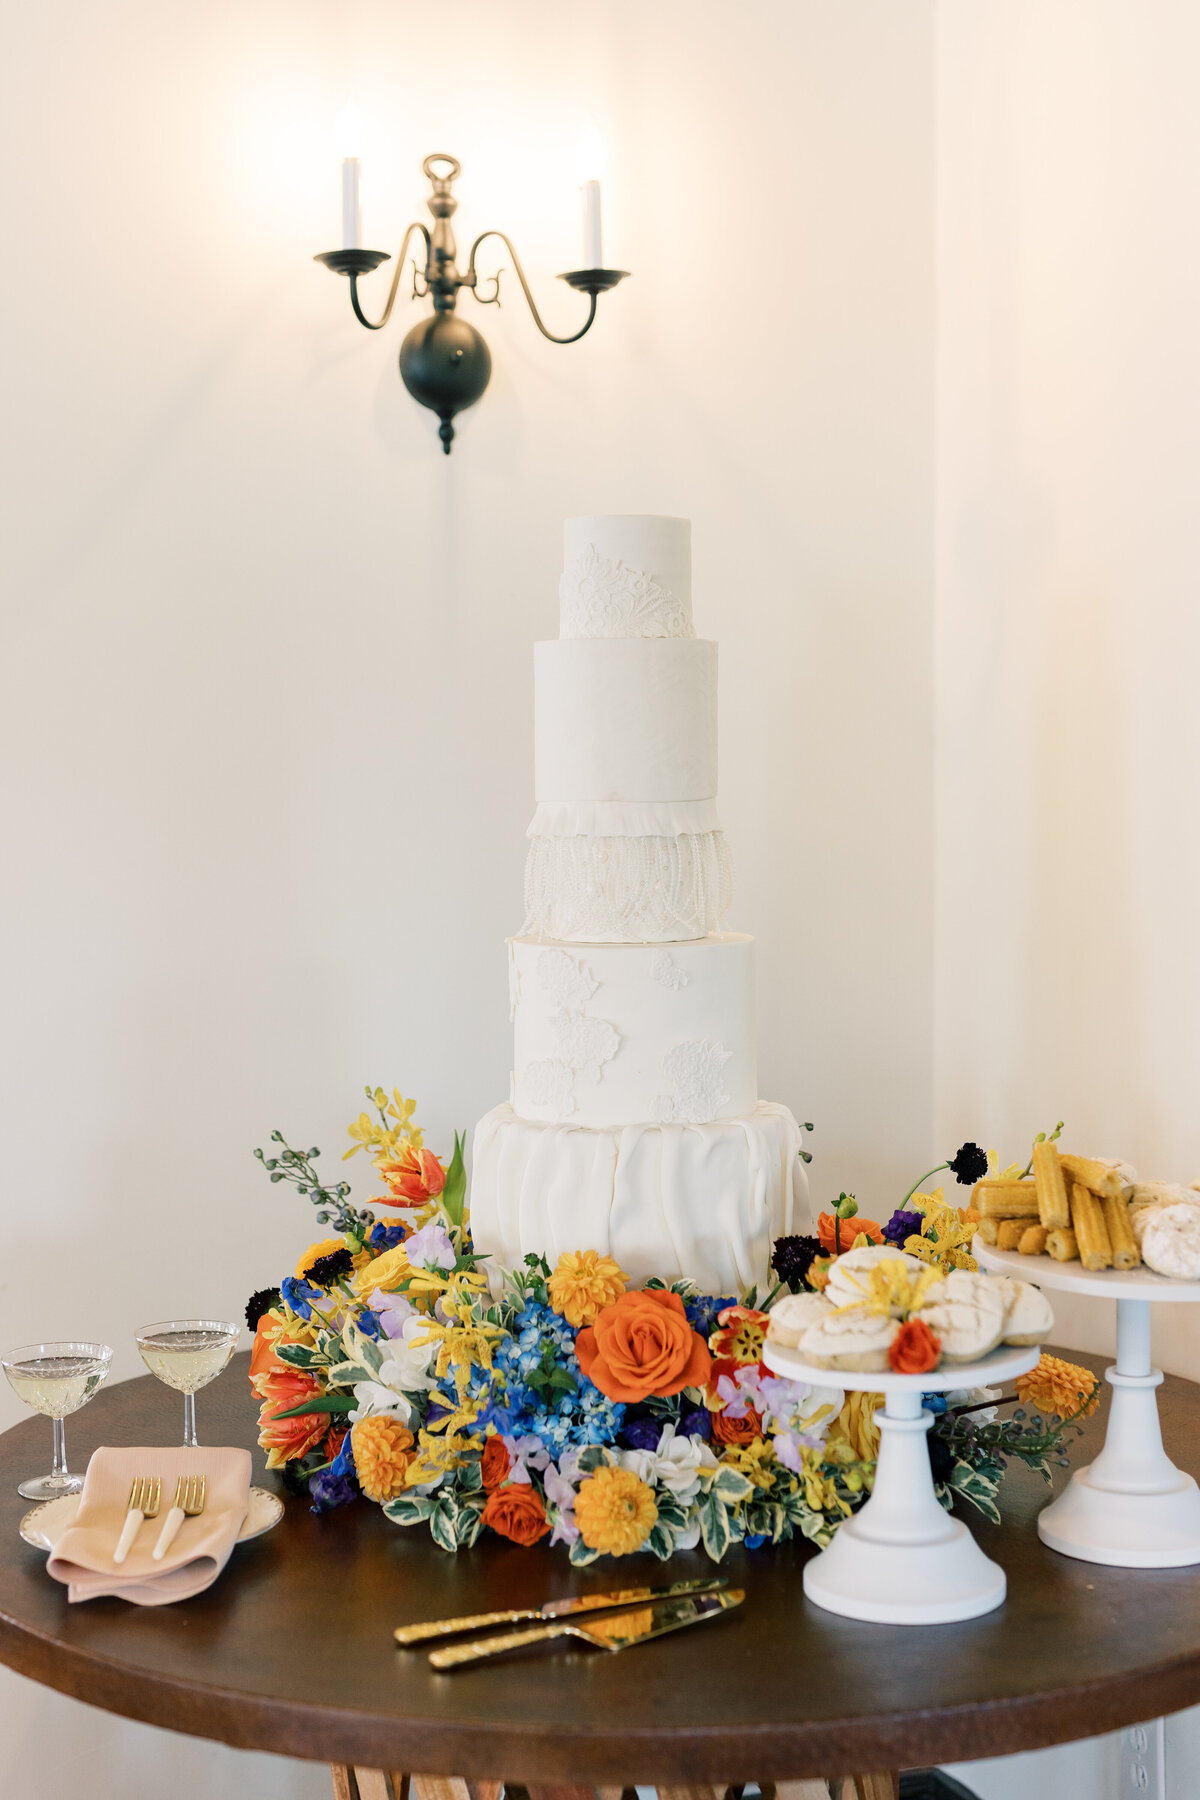 5 tier spanish inspired wedding cake with bright flowers surrounding it